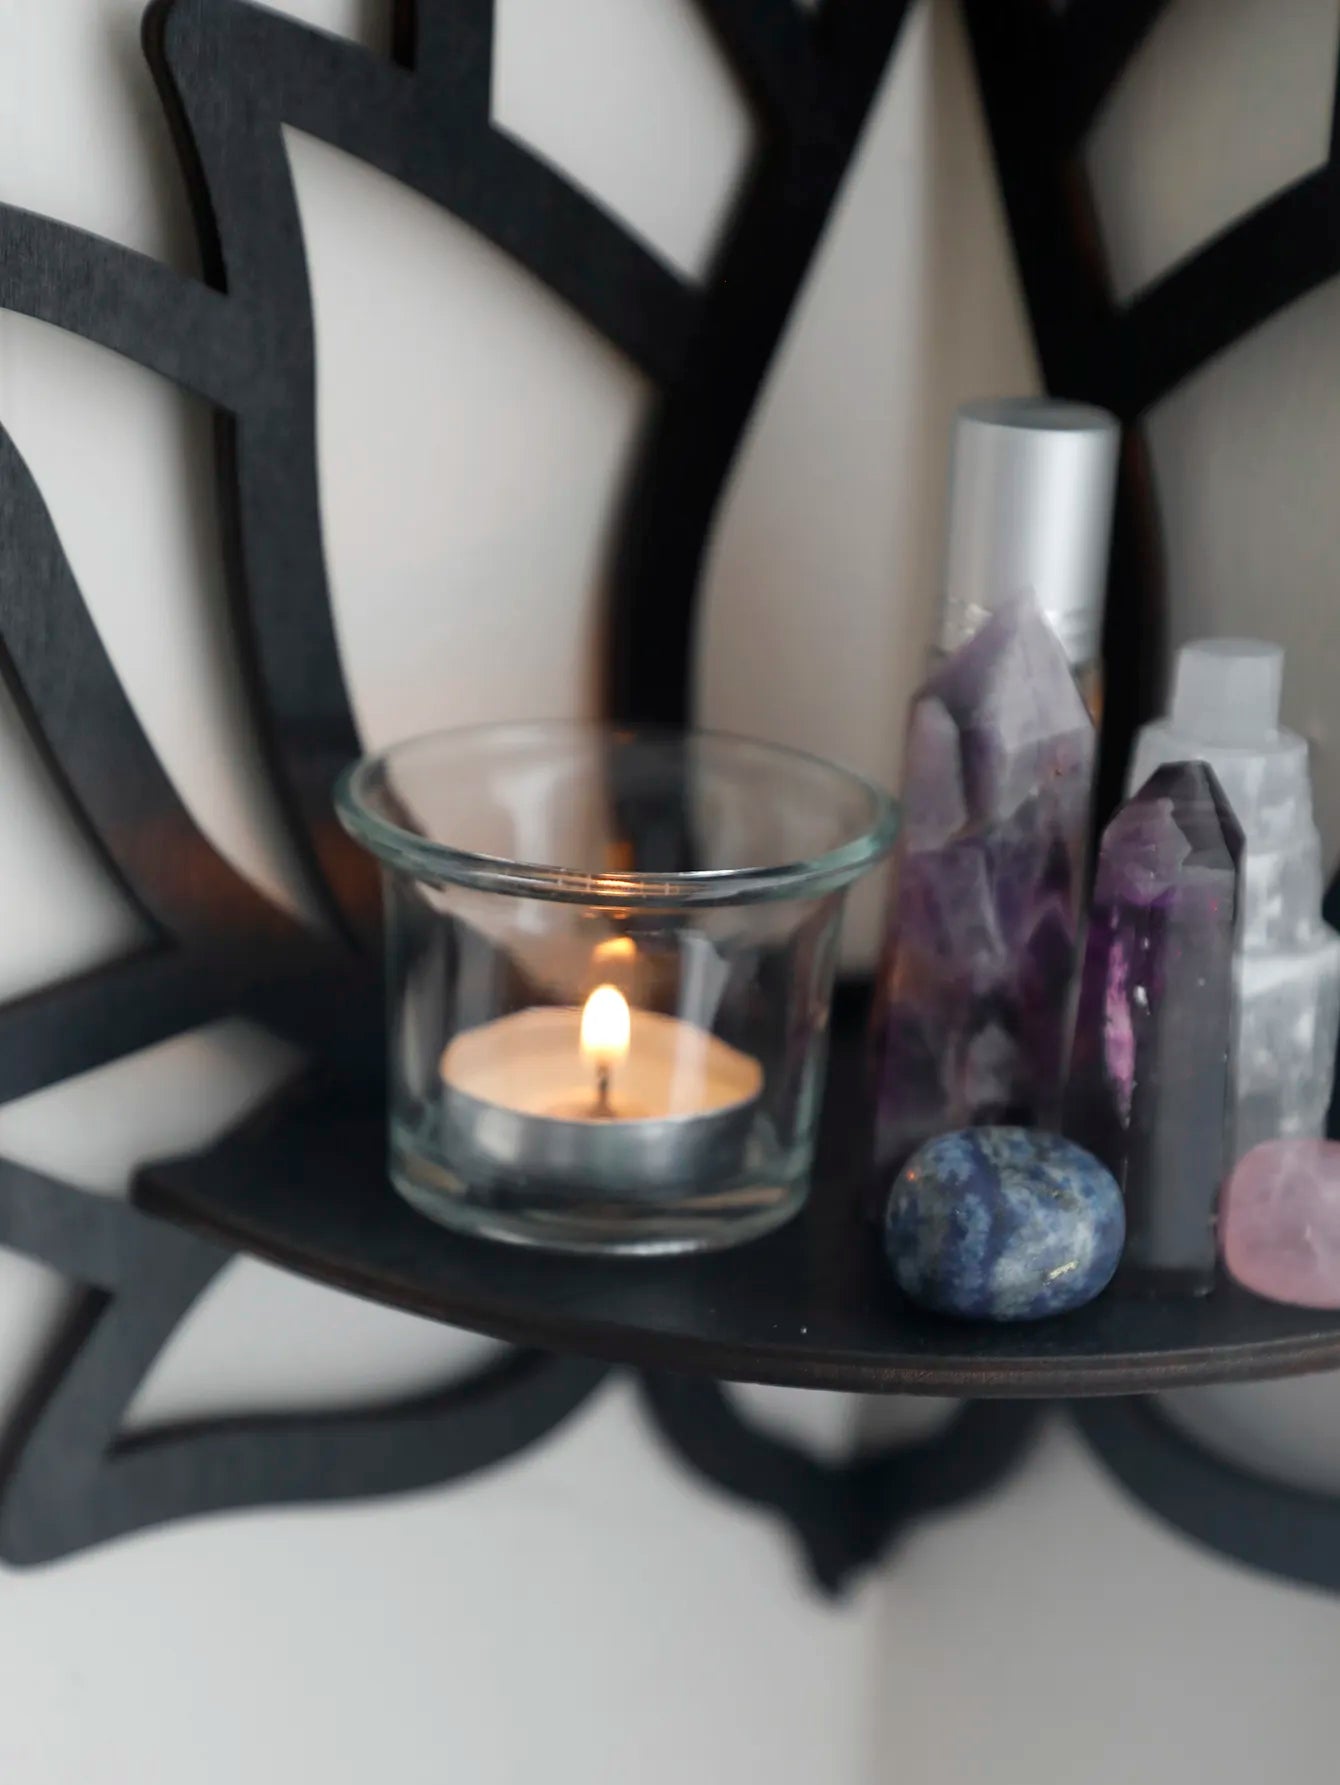 Lotus Crystal Corner Shelf Crystal Shelf Display Svarta träväggshyllor Essential Oil Shelf Witchy Decor Eesthetic Spiritual